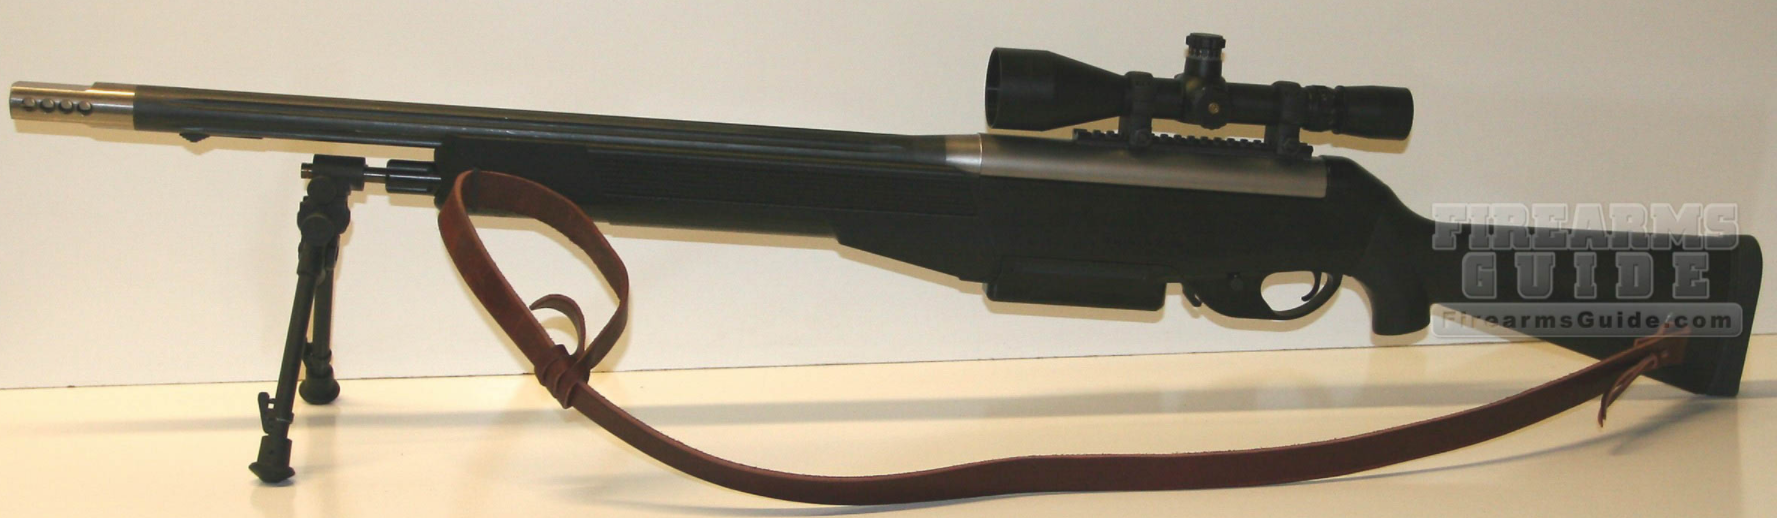 Vigilance Rifles VR1 Synthetic